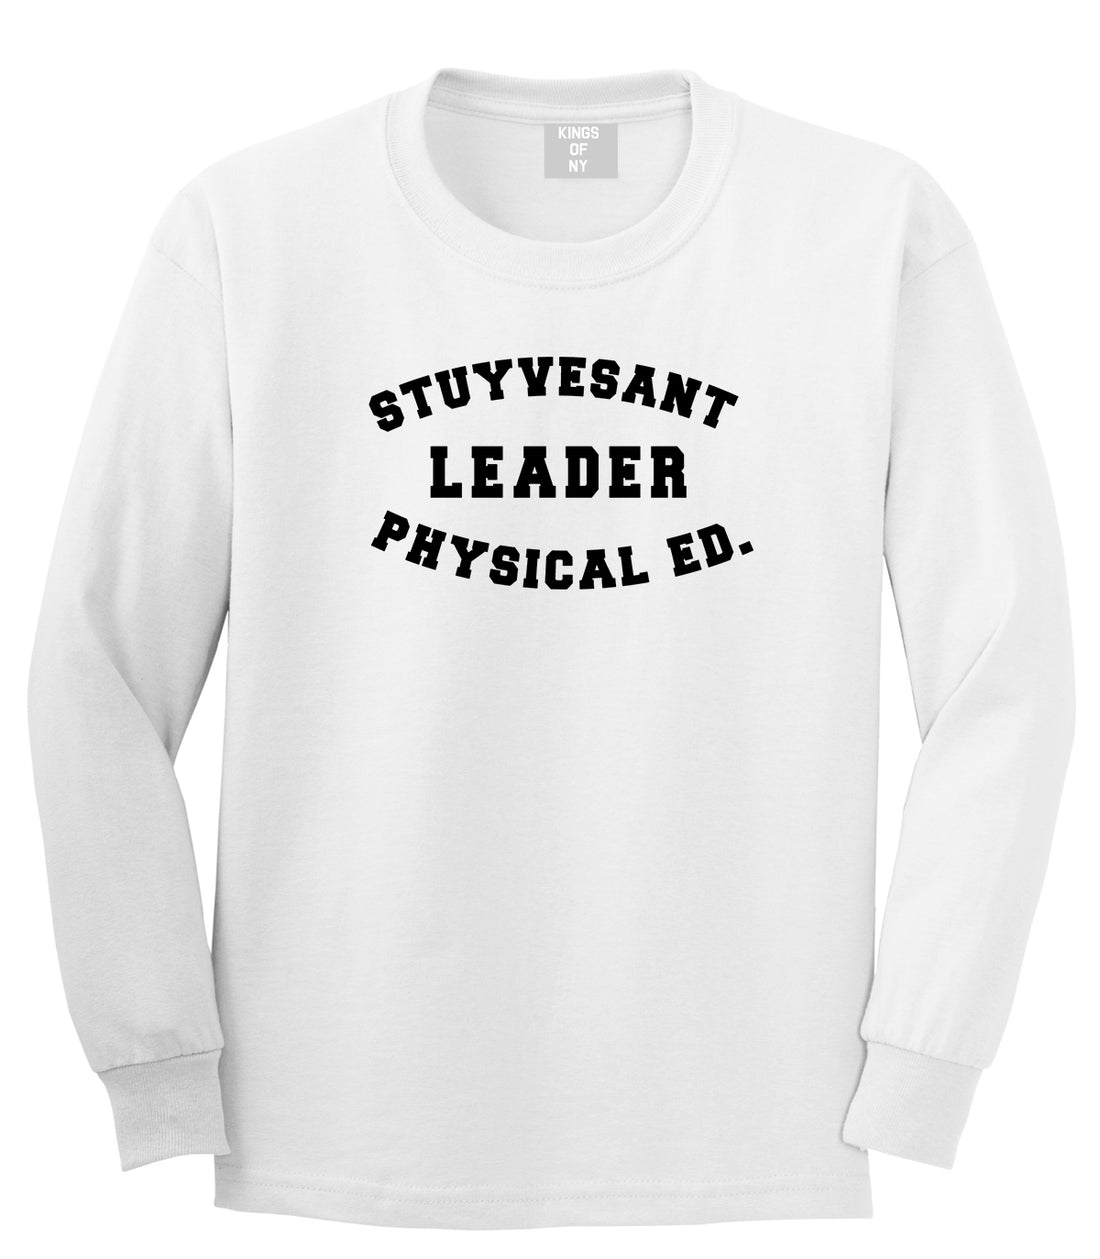 Stuyvesant Leader Physical Ed Mens Long Sleeve T-Shirt White